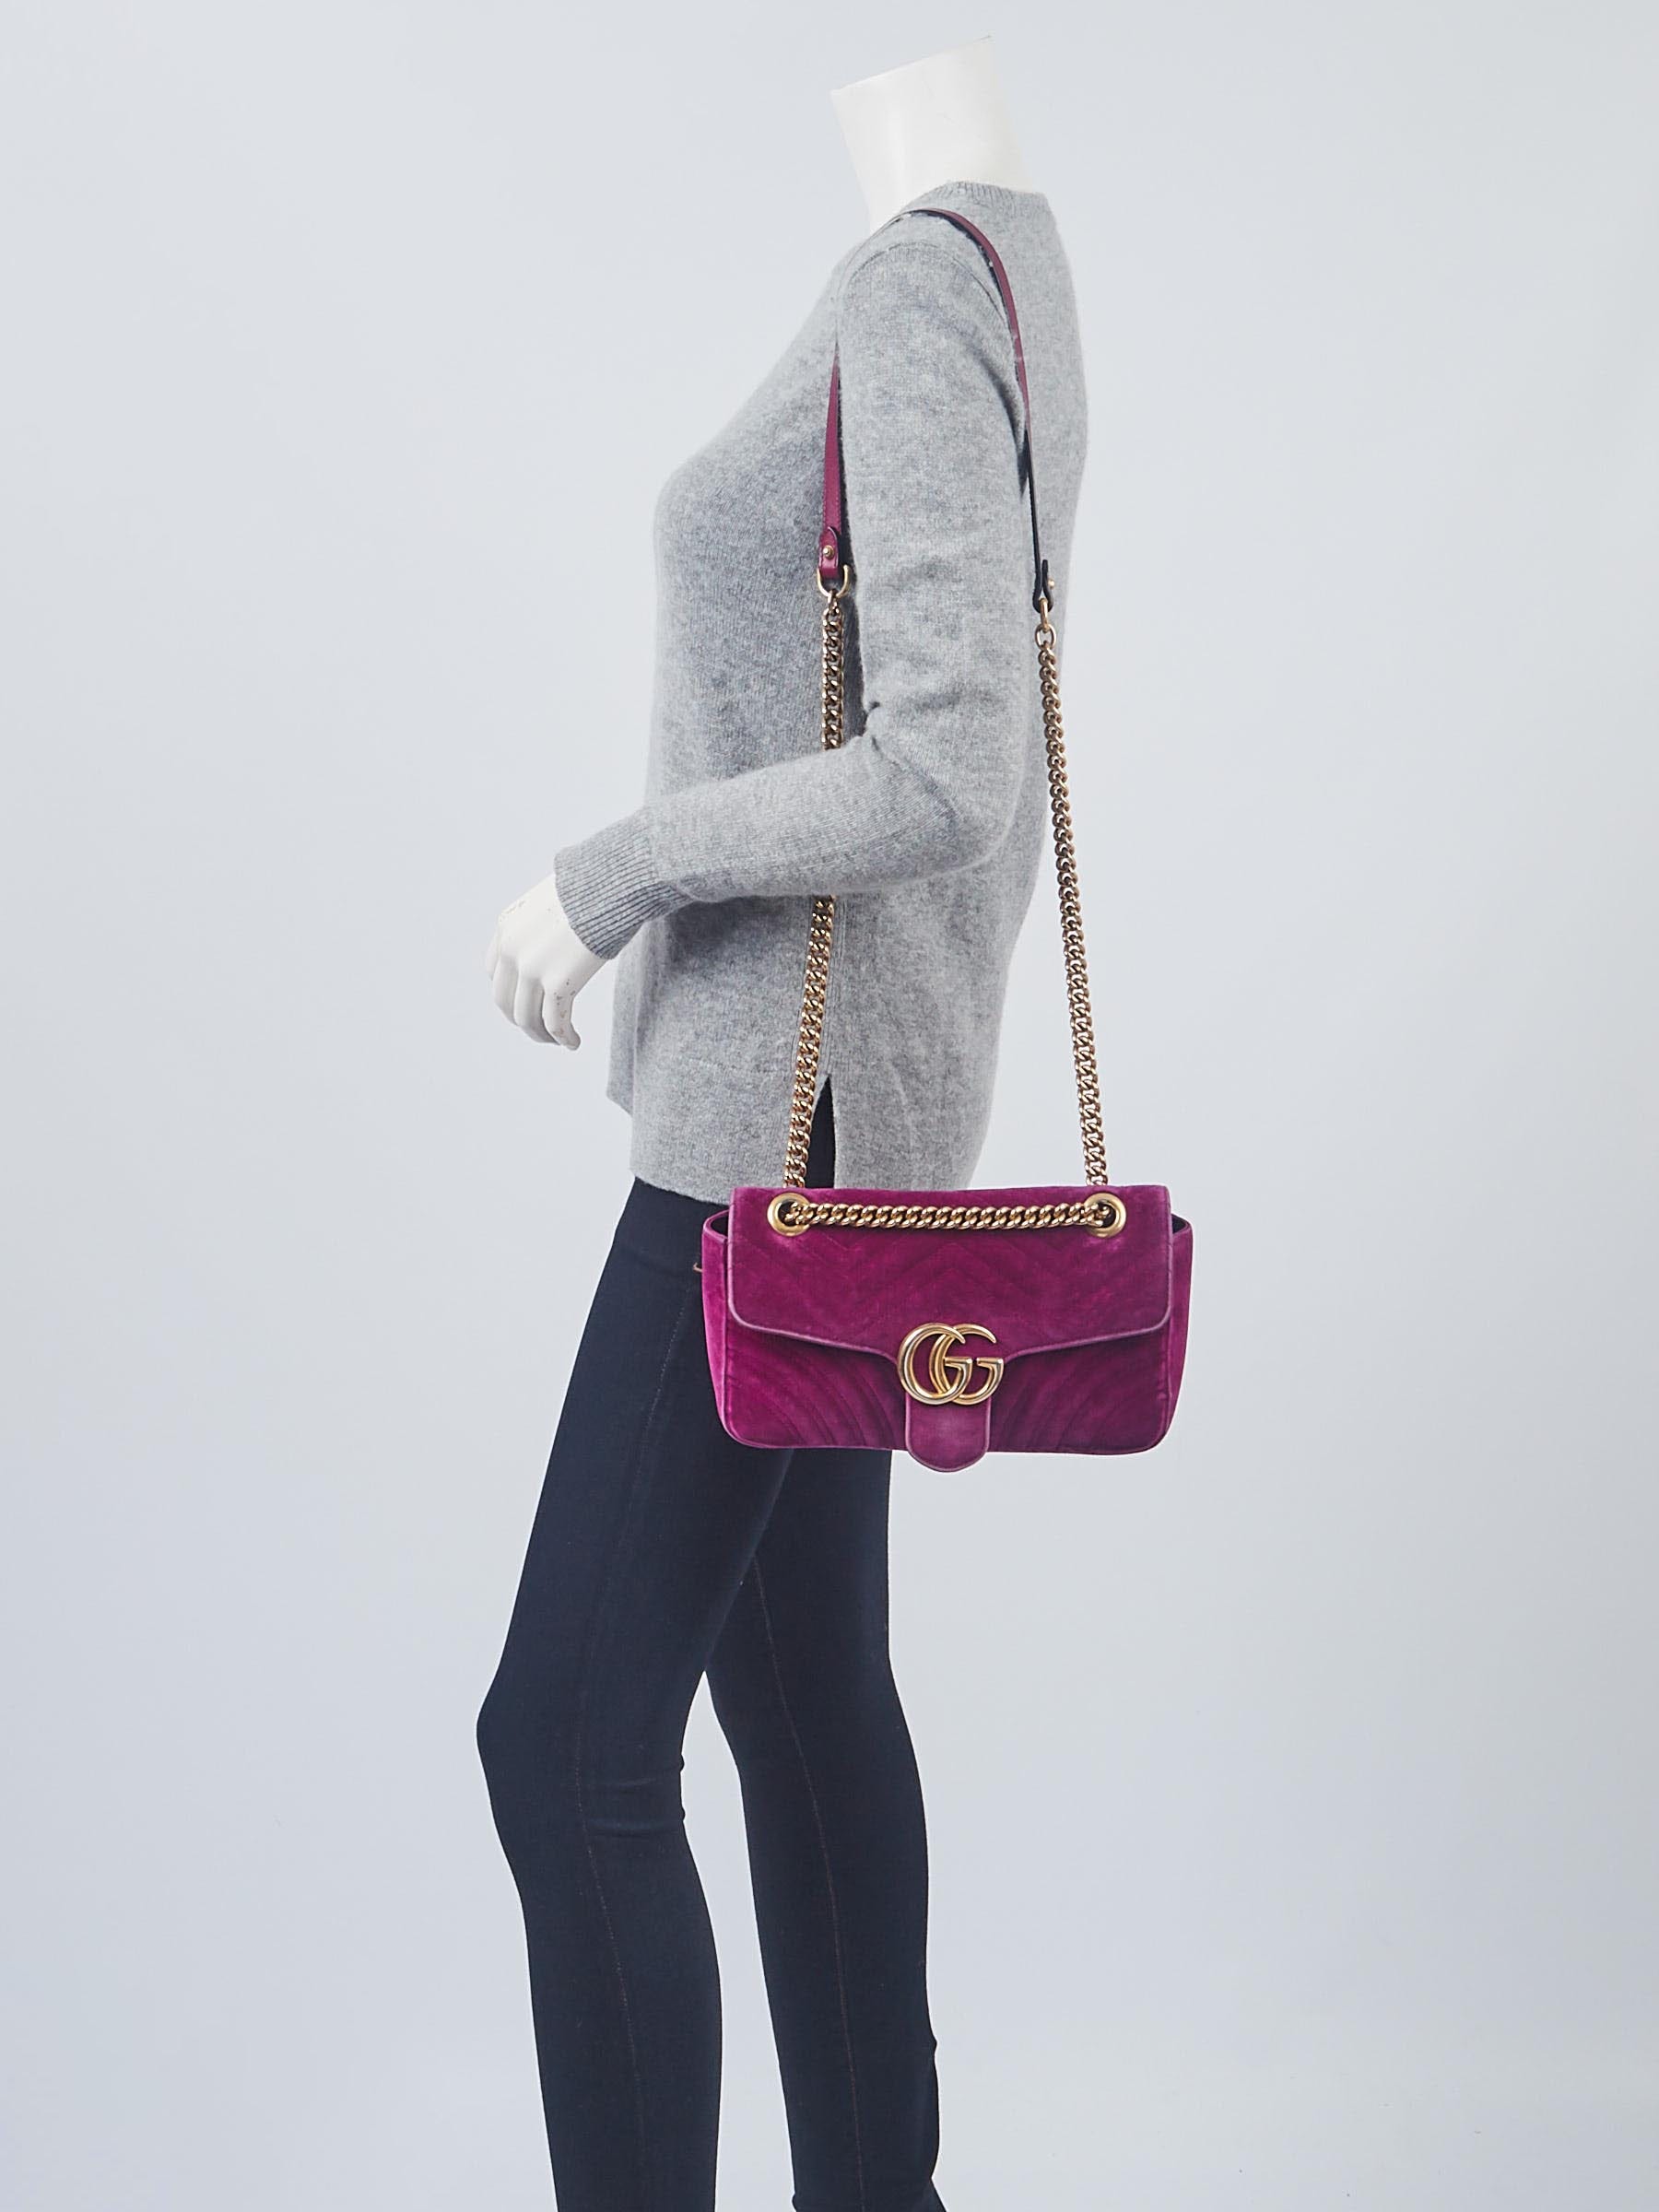 Outfit: Gucci marmont fuchsia velvet bag